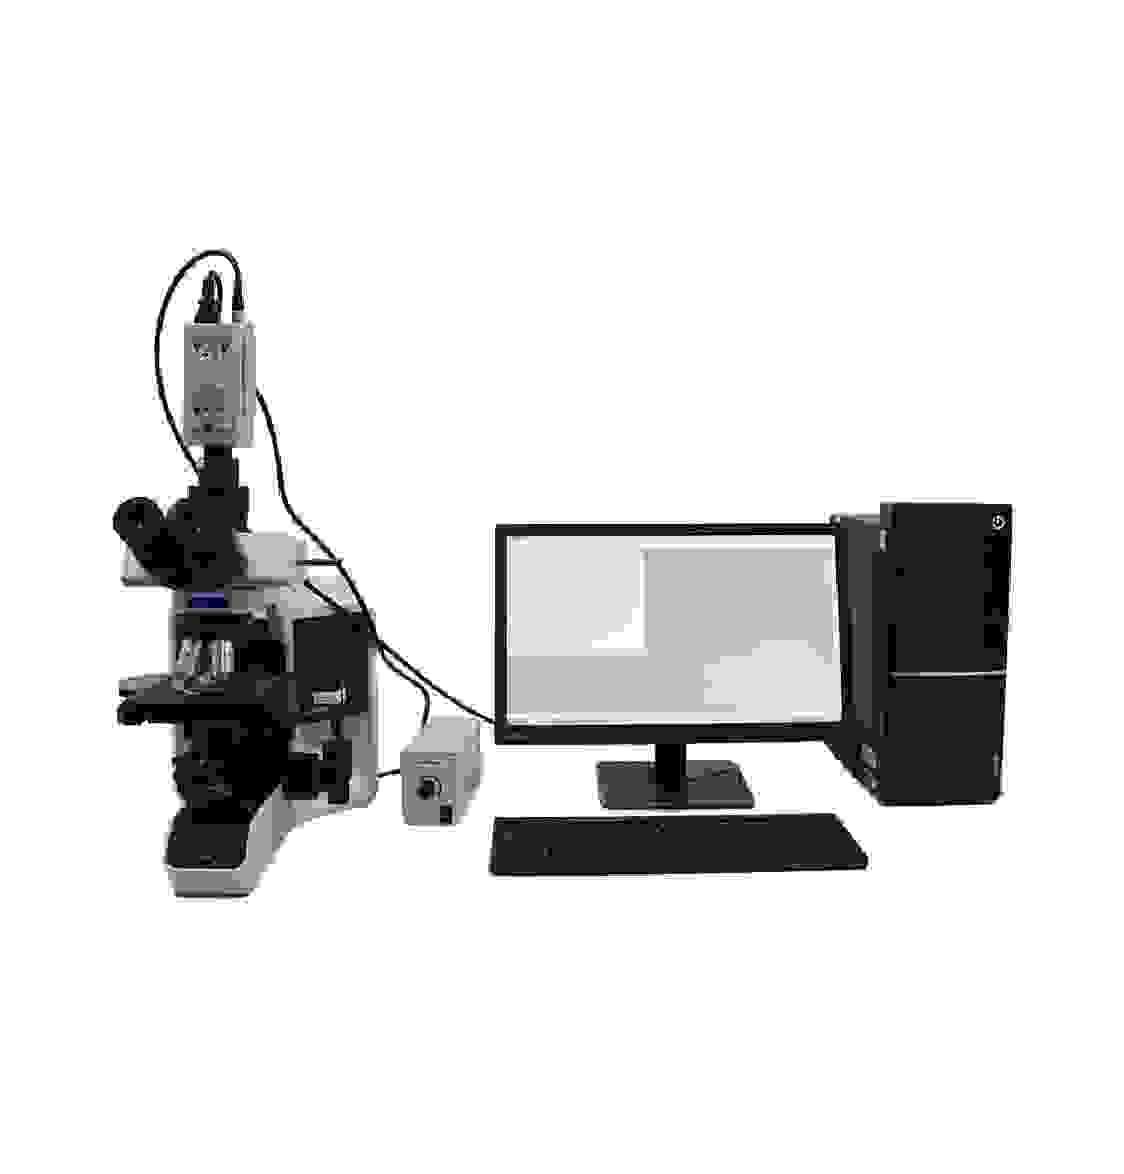 Microscope - Fiber Analyser